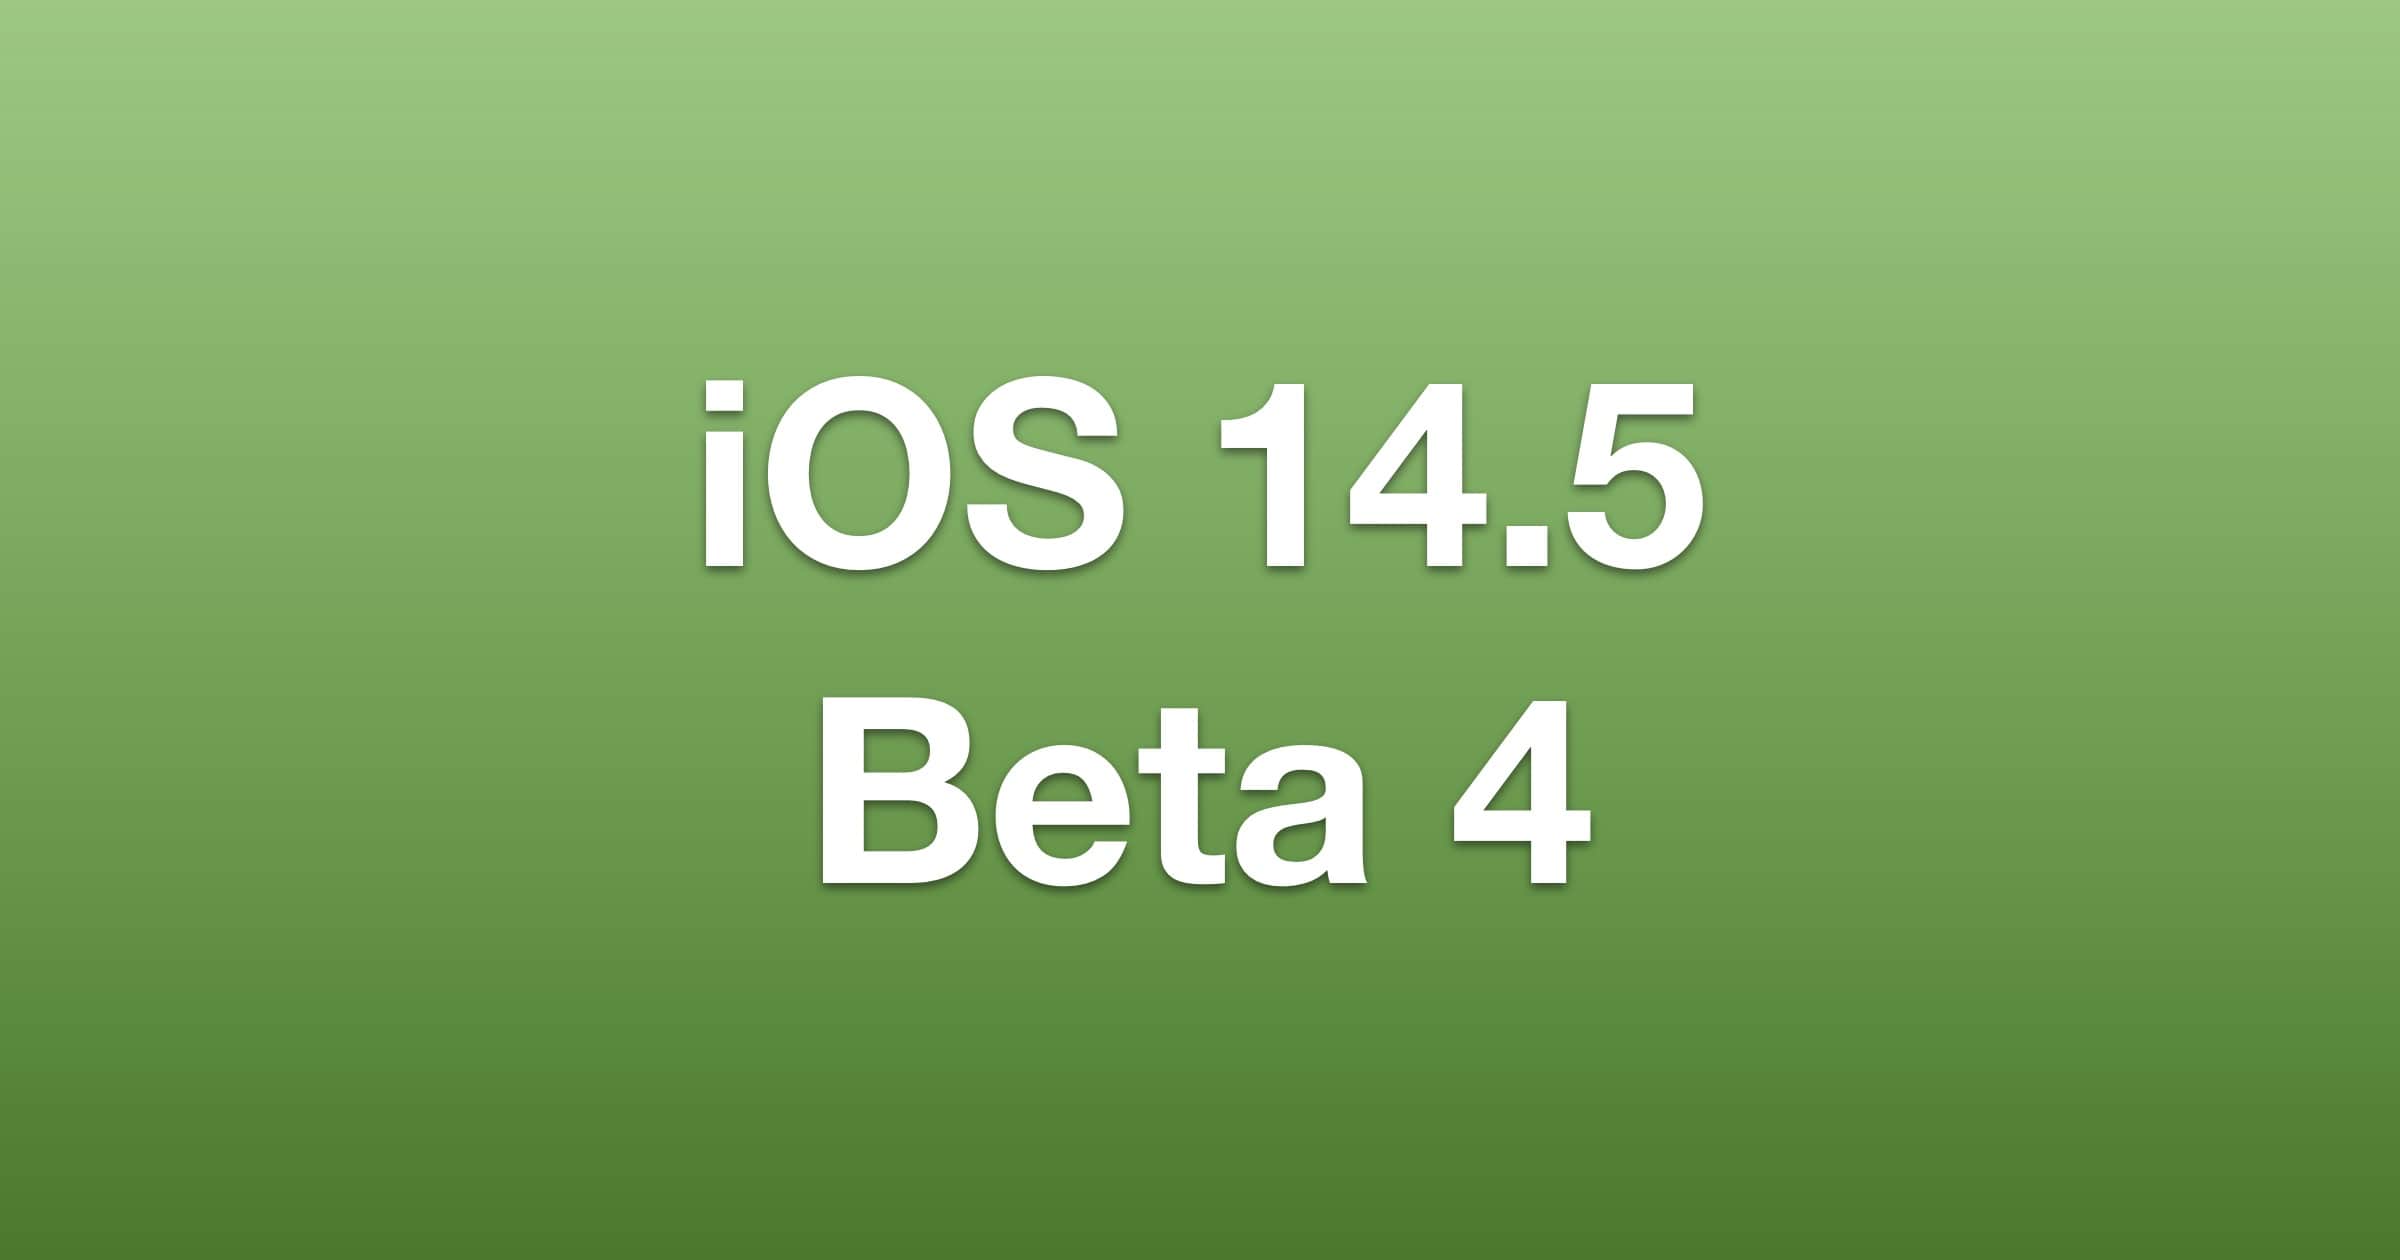 iOS 14.5 beta 4